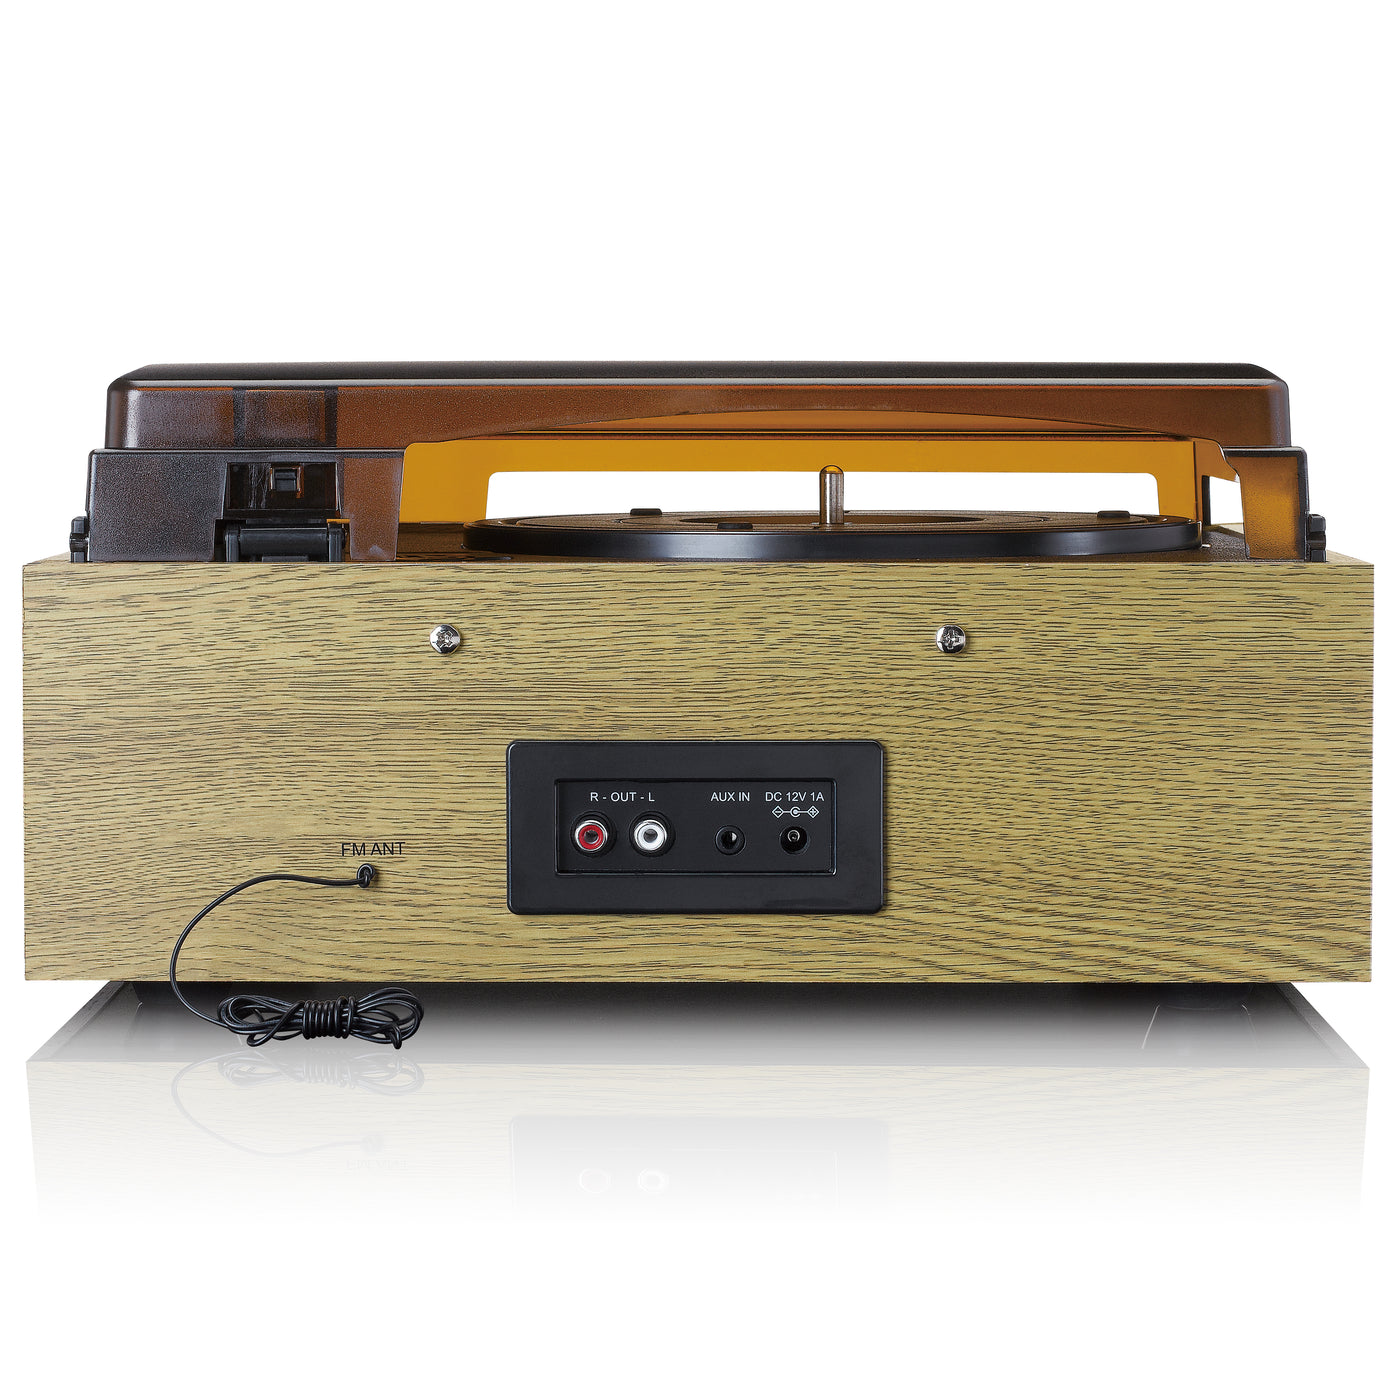 Classic Phono TT-41OK - Retro Plattenspieler - Bluetooth® - Integrierte Lautsprecher - Eiche